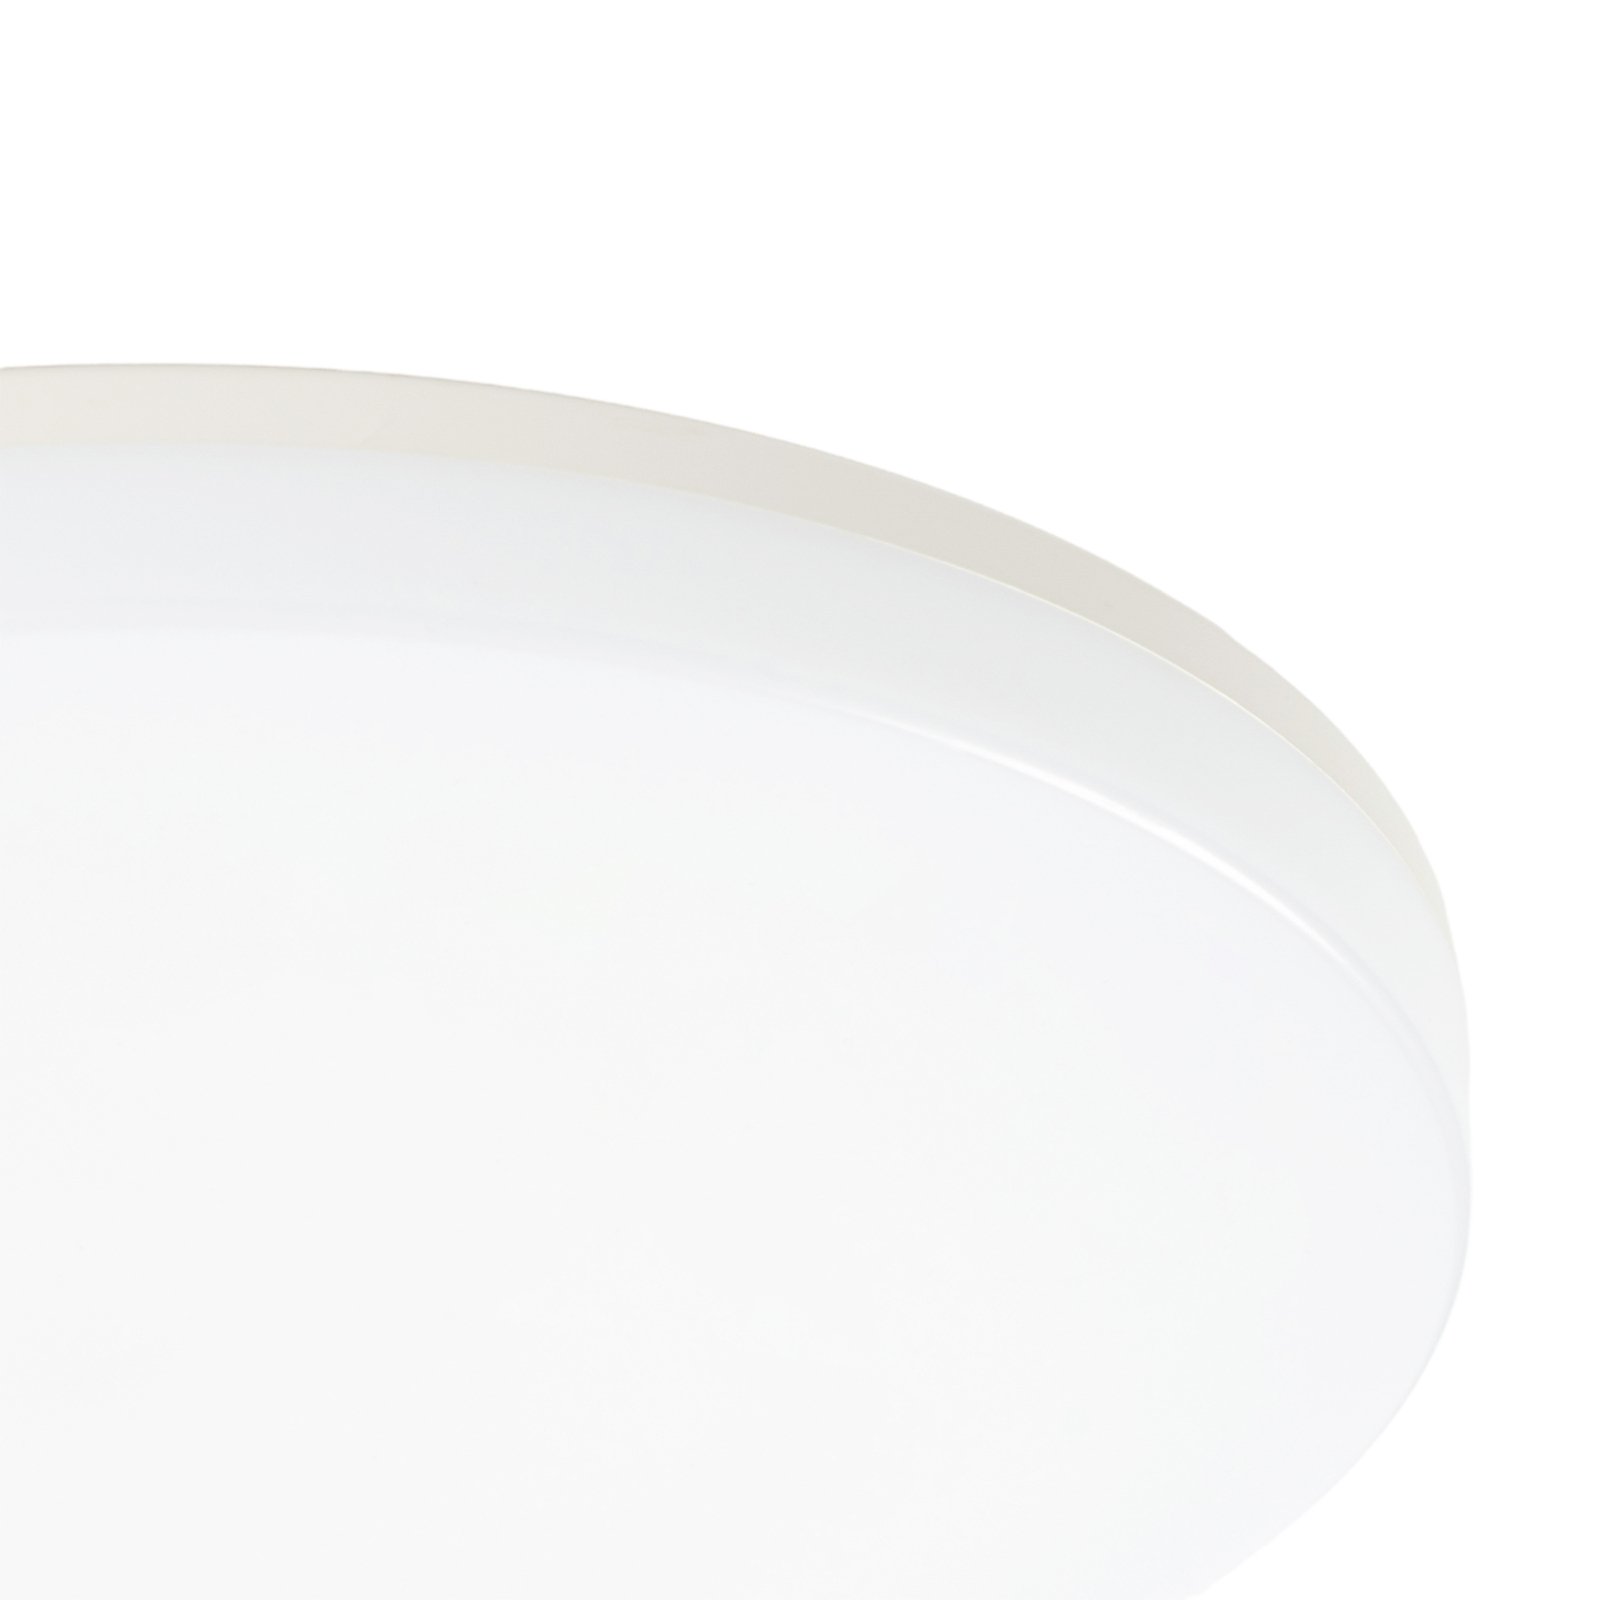 Prios Artin plafonieră LED, rotundă, 28 cm